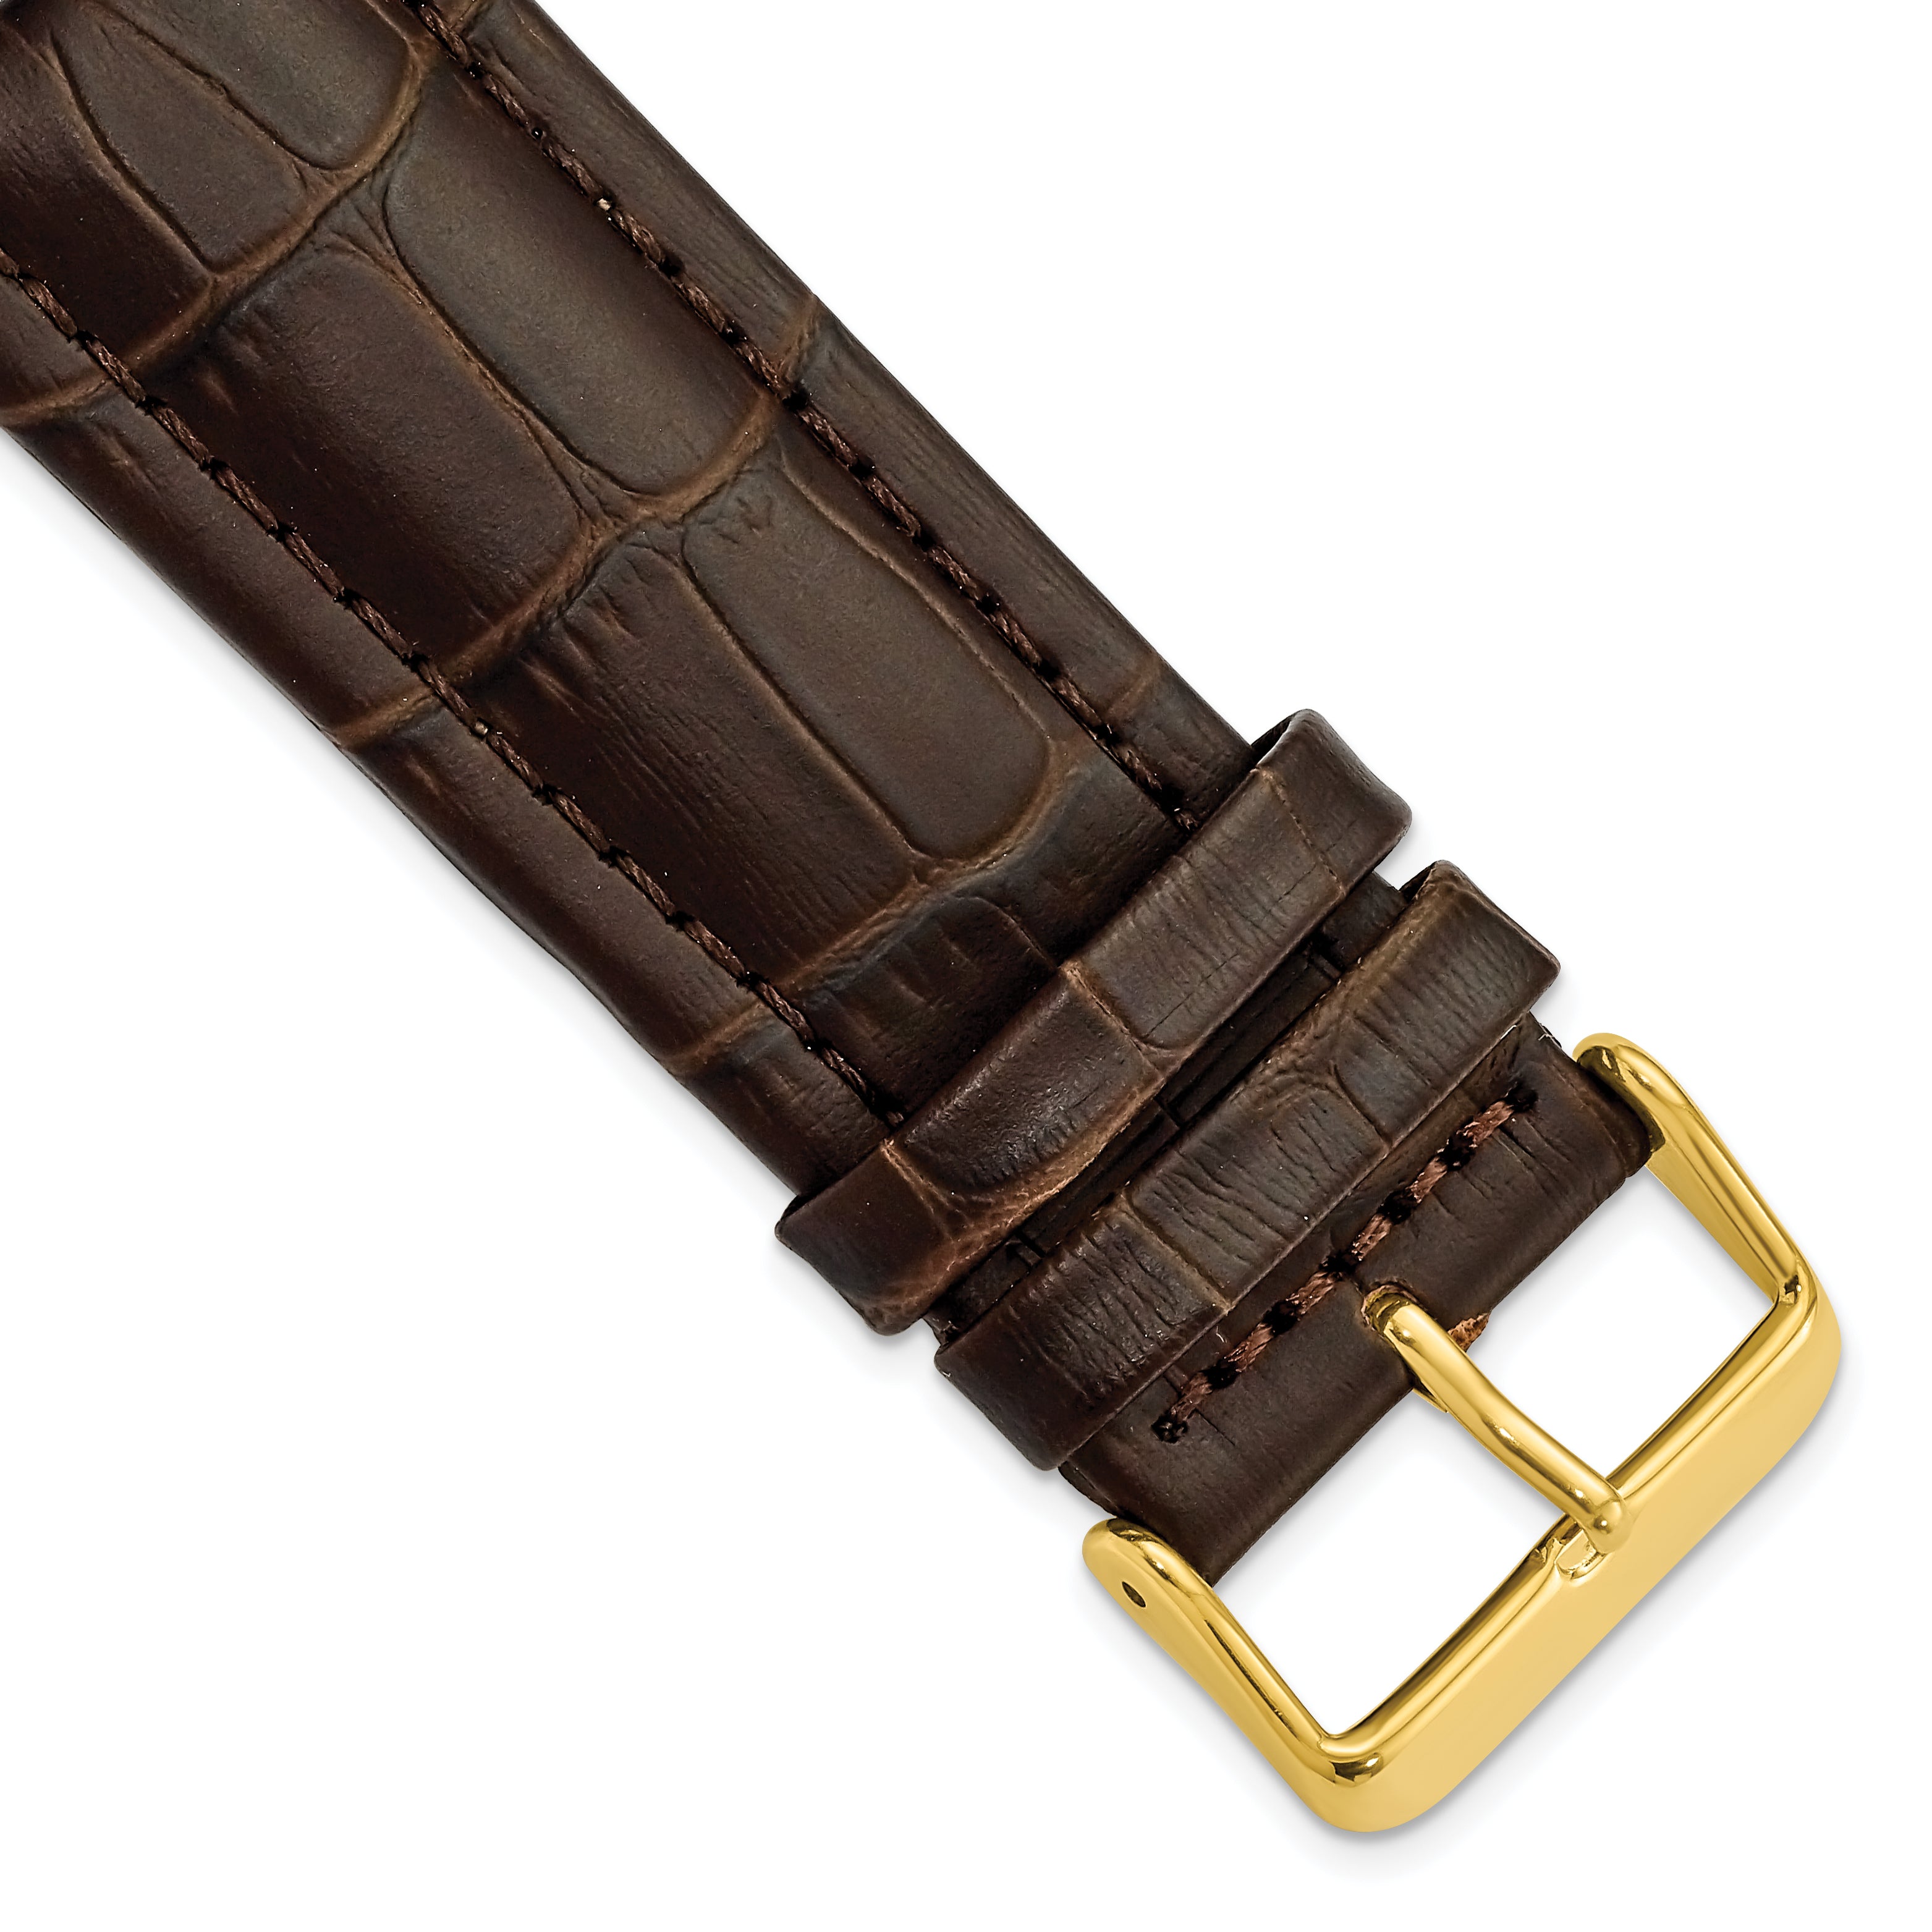 DeBeer 26mm Dark Brown Matte Alligator Grain Leather with Gold-tone Buckle 7.5 inch Watch Band